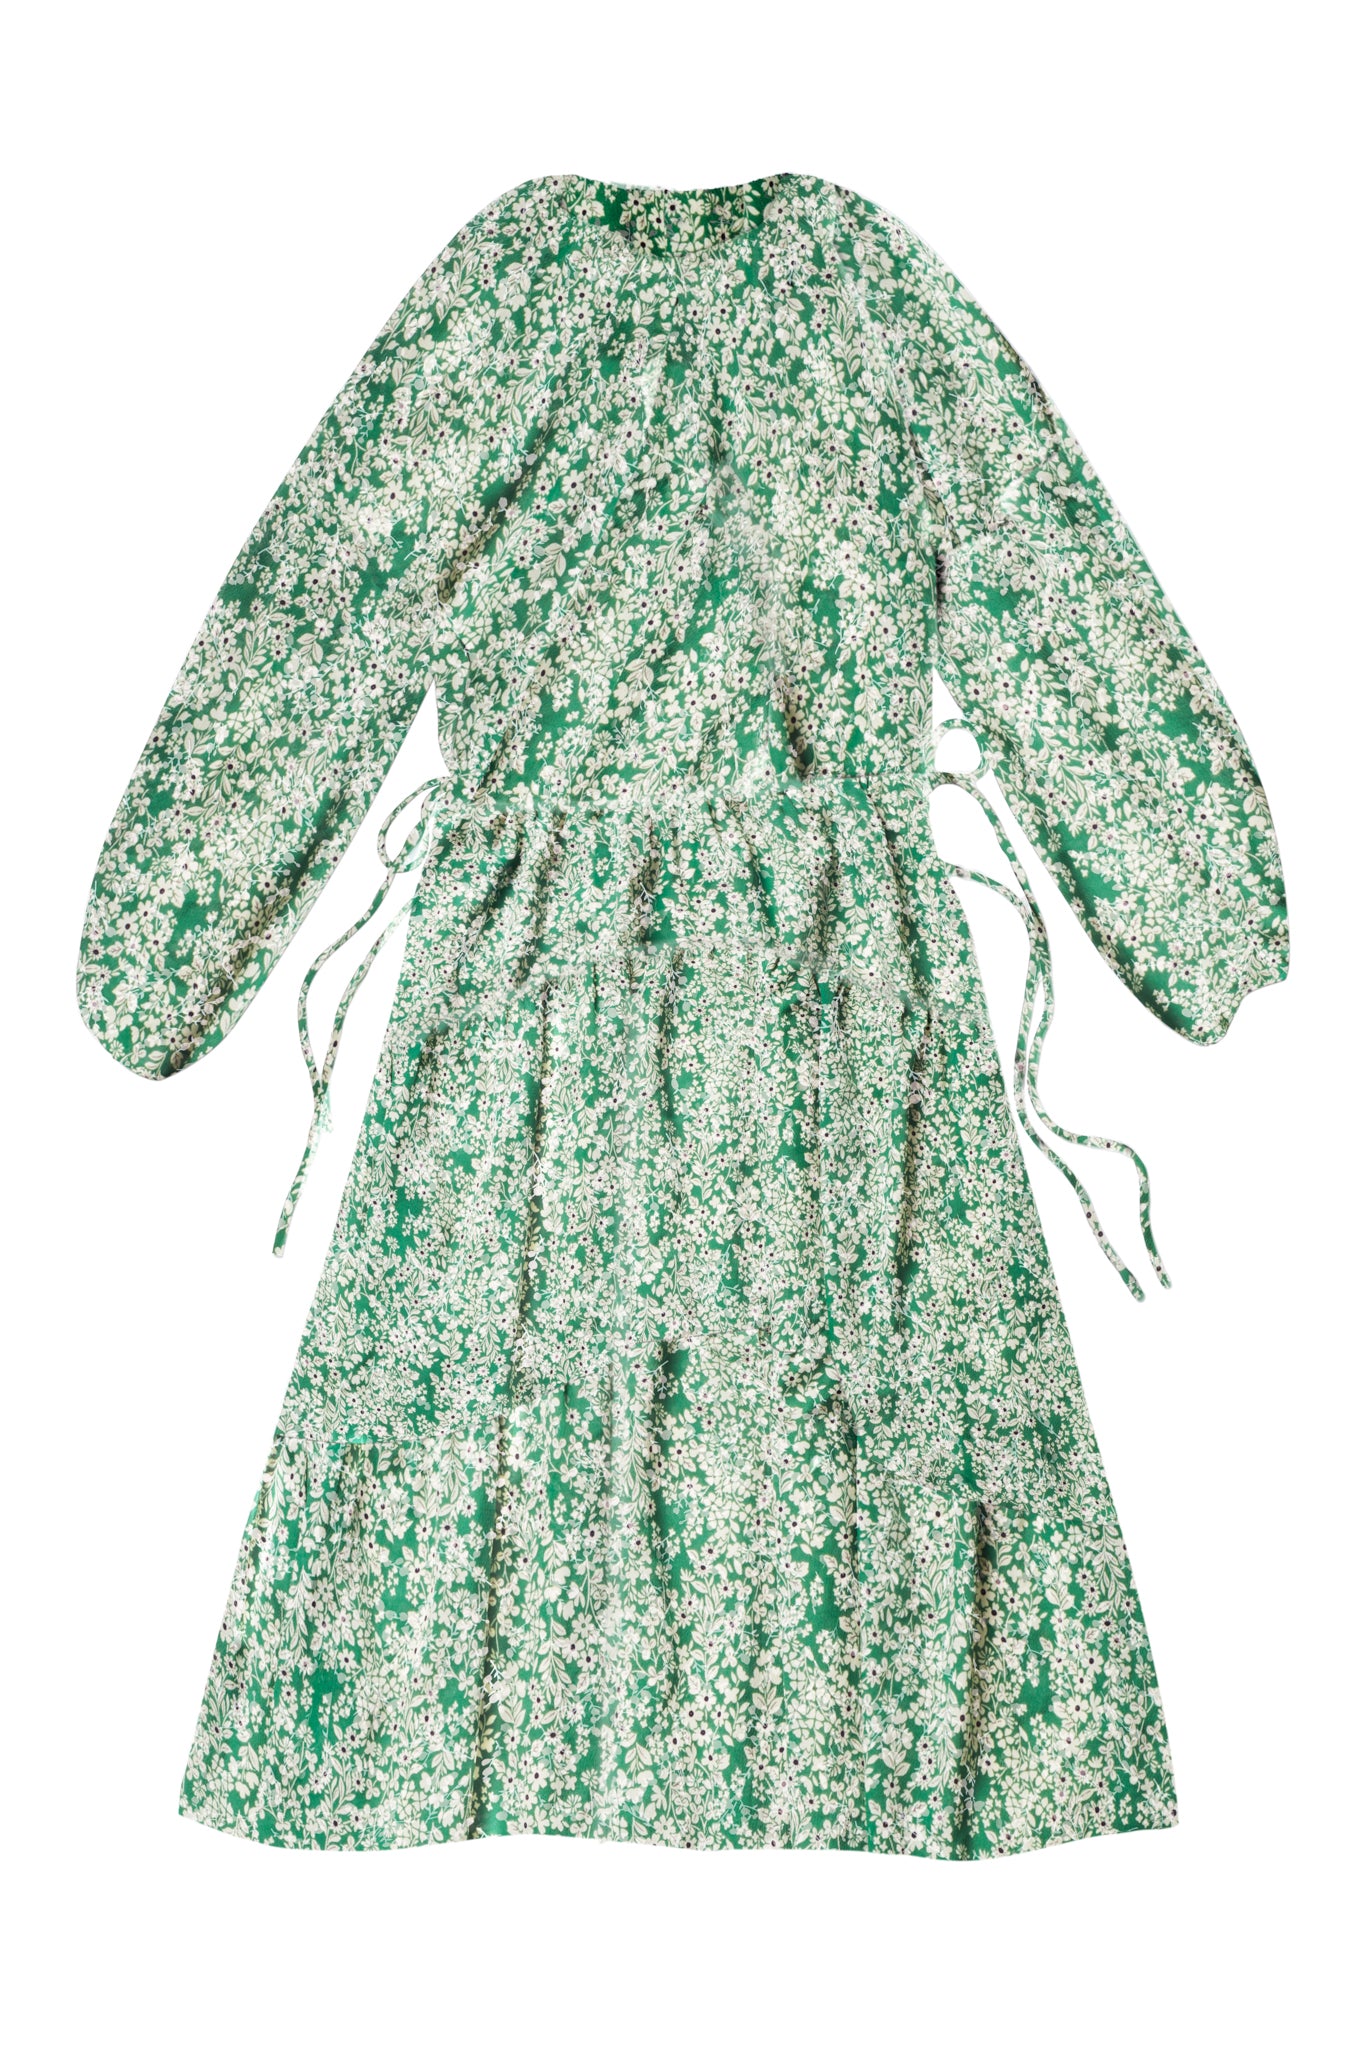 Gathered Dress in Green Flower Print #7903 FINAL SALE